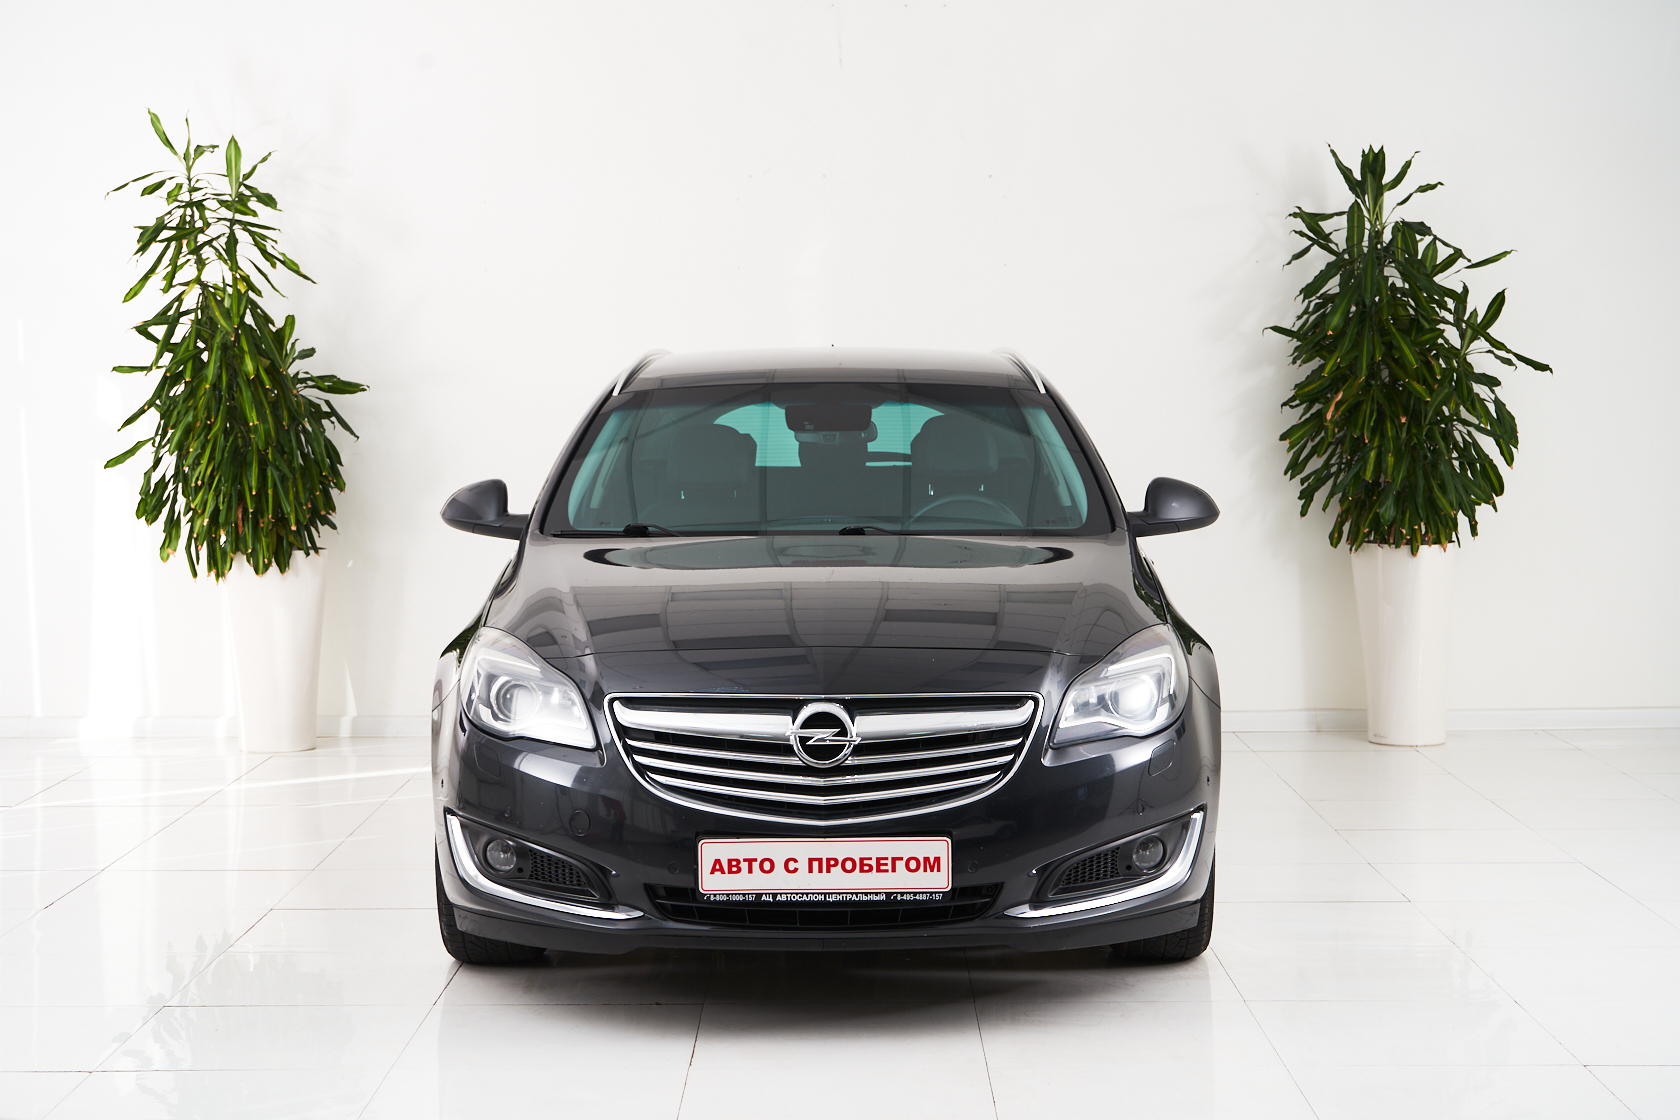 2014 Opel Insignia I Рестайлинг №5446274, Черный, 909000 рублей - вид 2